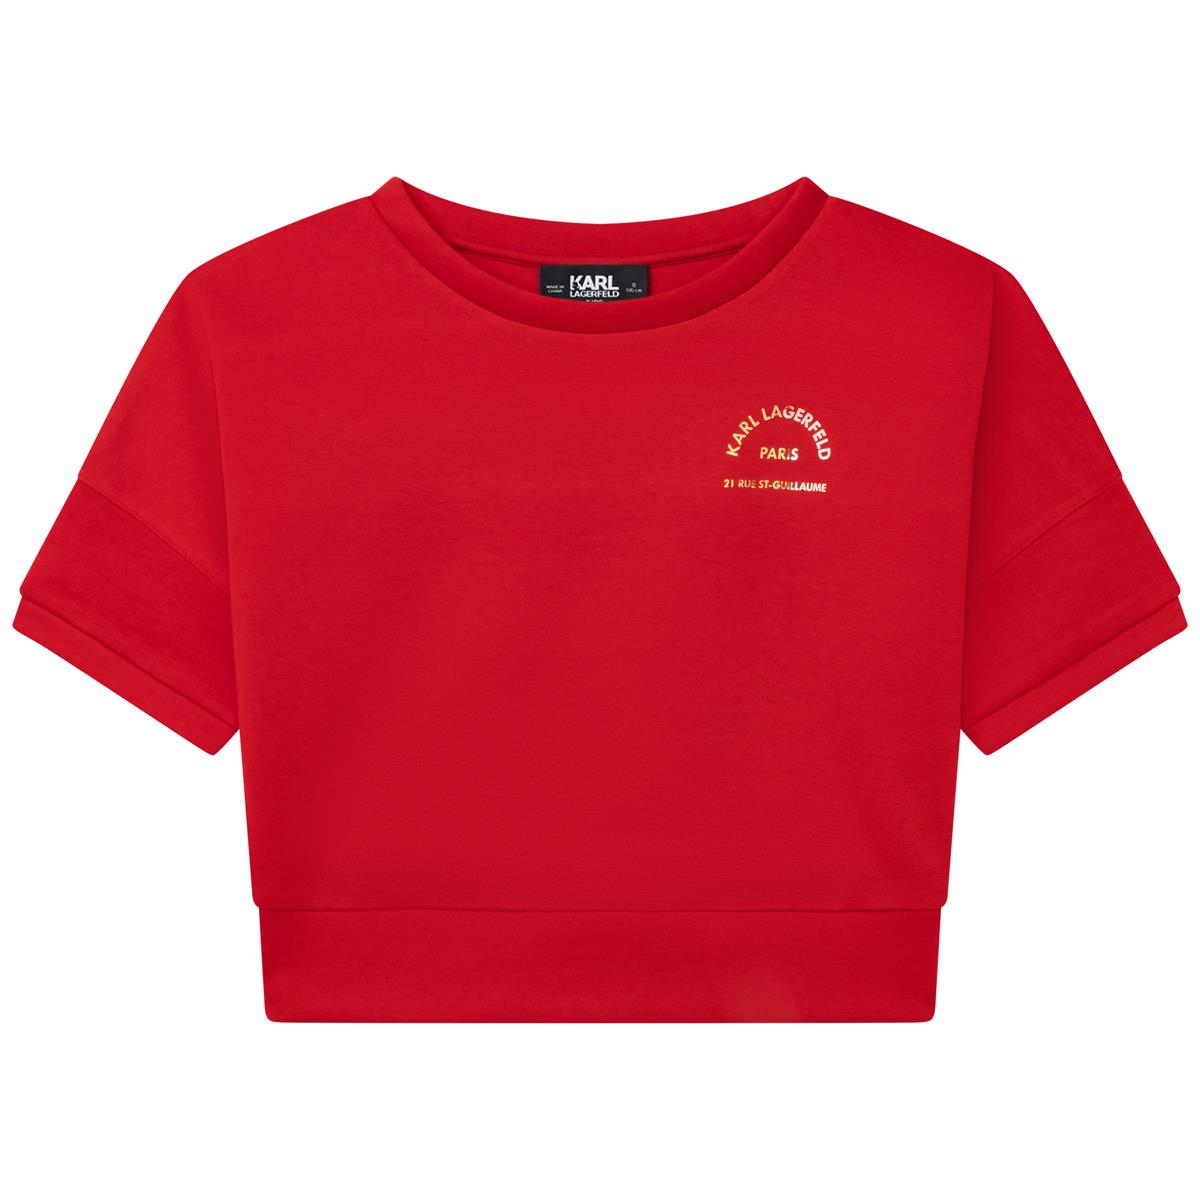 Boys & Girls Red Sweatshirt